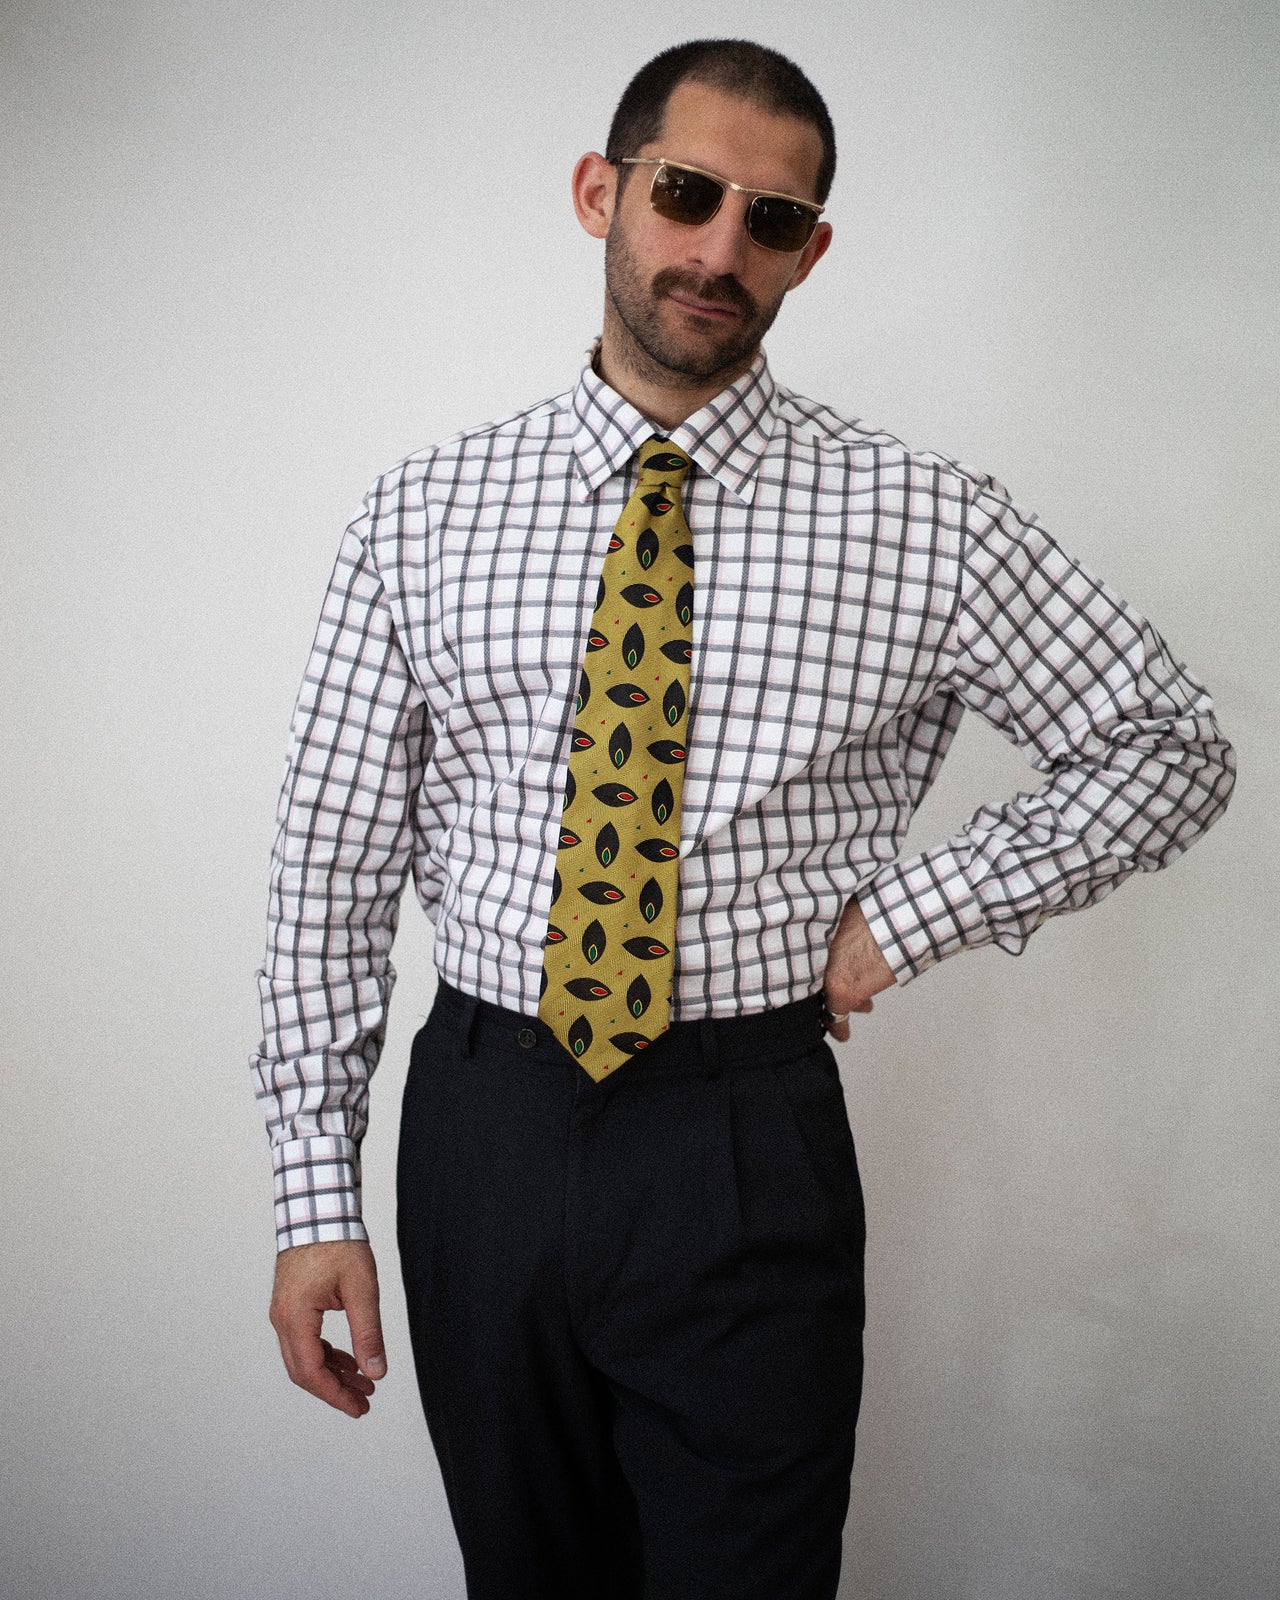 Versace, Checkered Shirt (L)